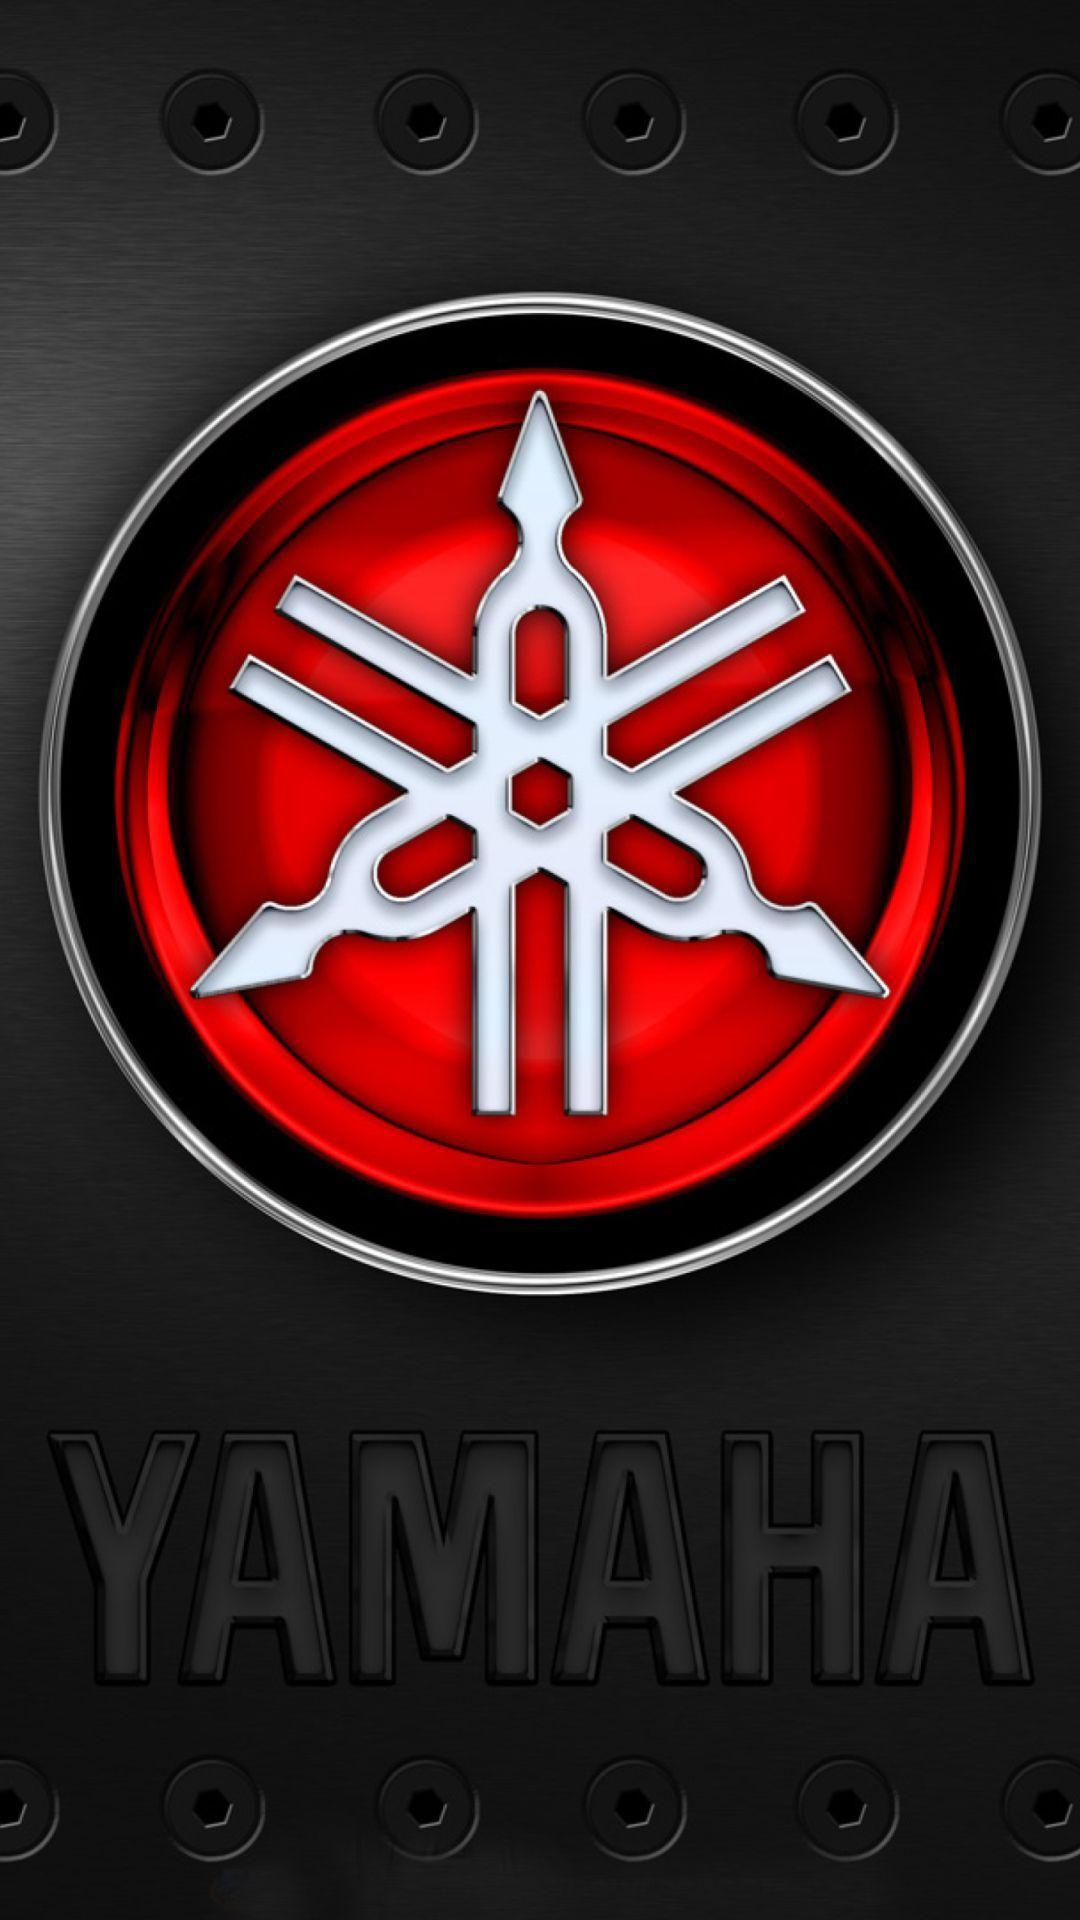 Yamaha Logo Wallpaper. Yamaha logo, Motorcycle